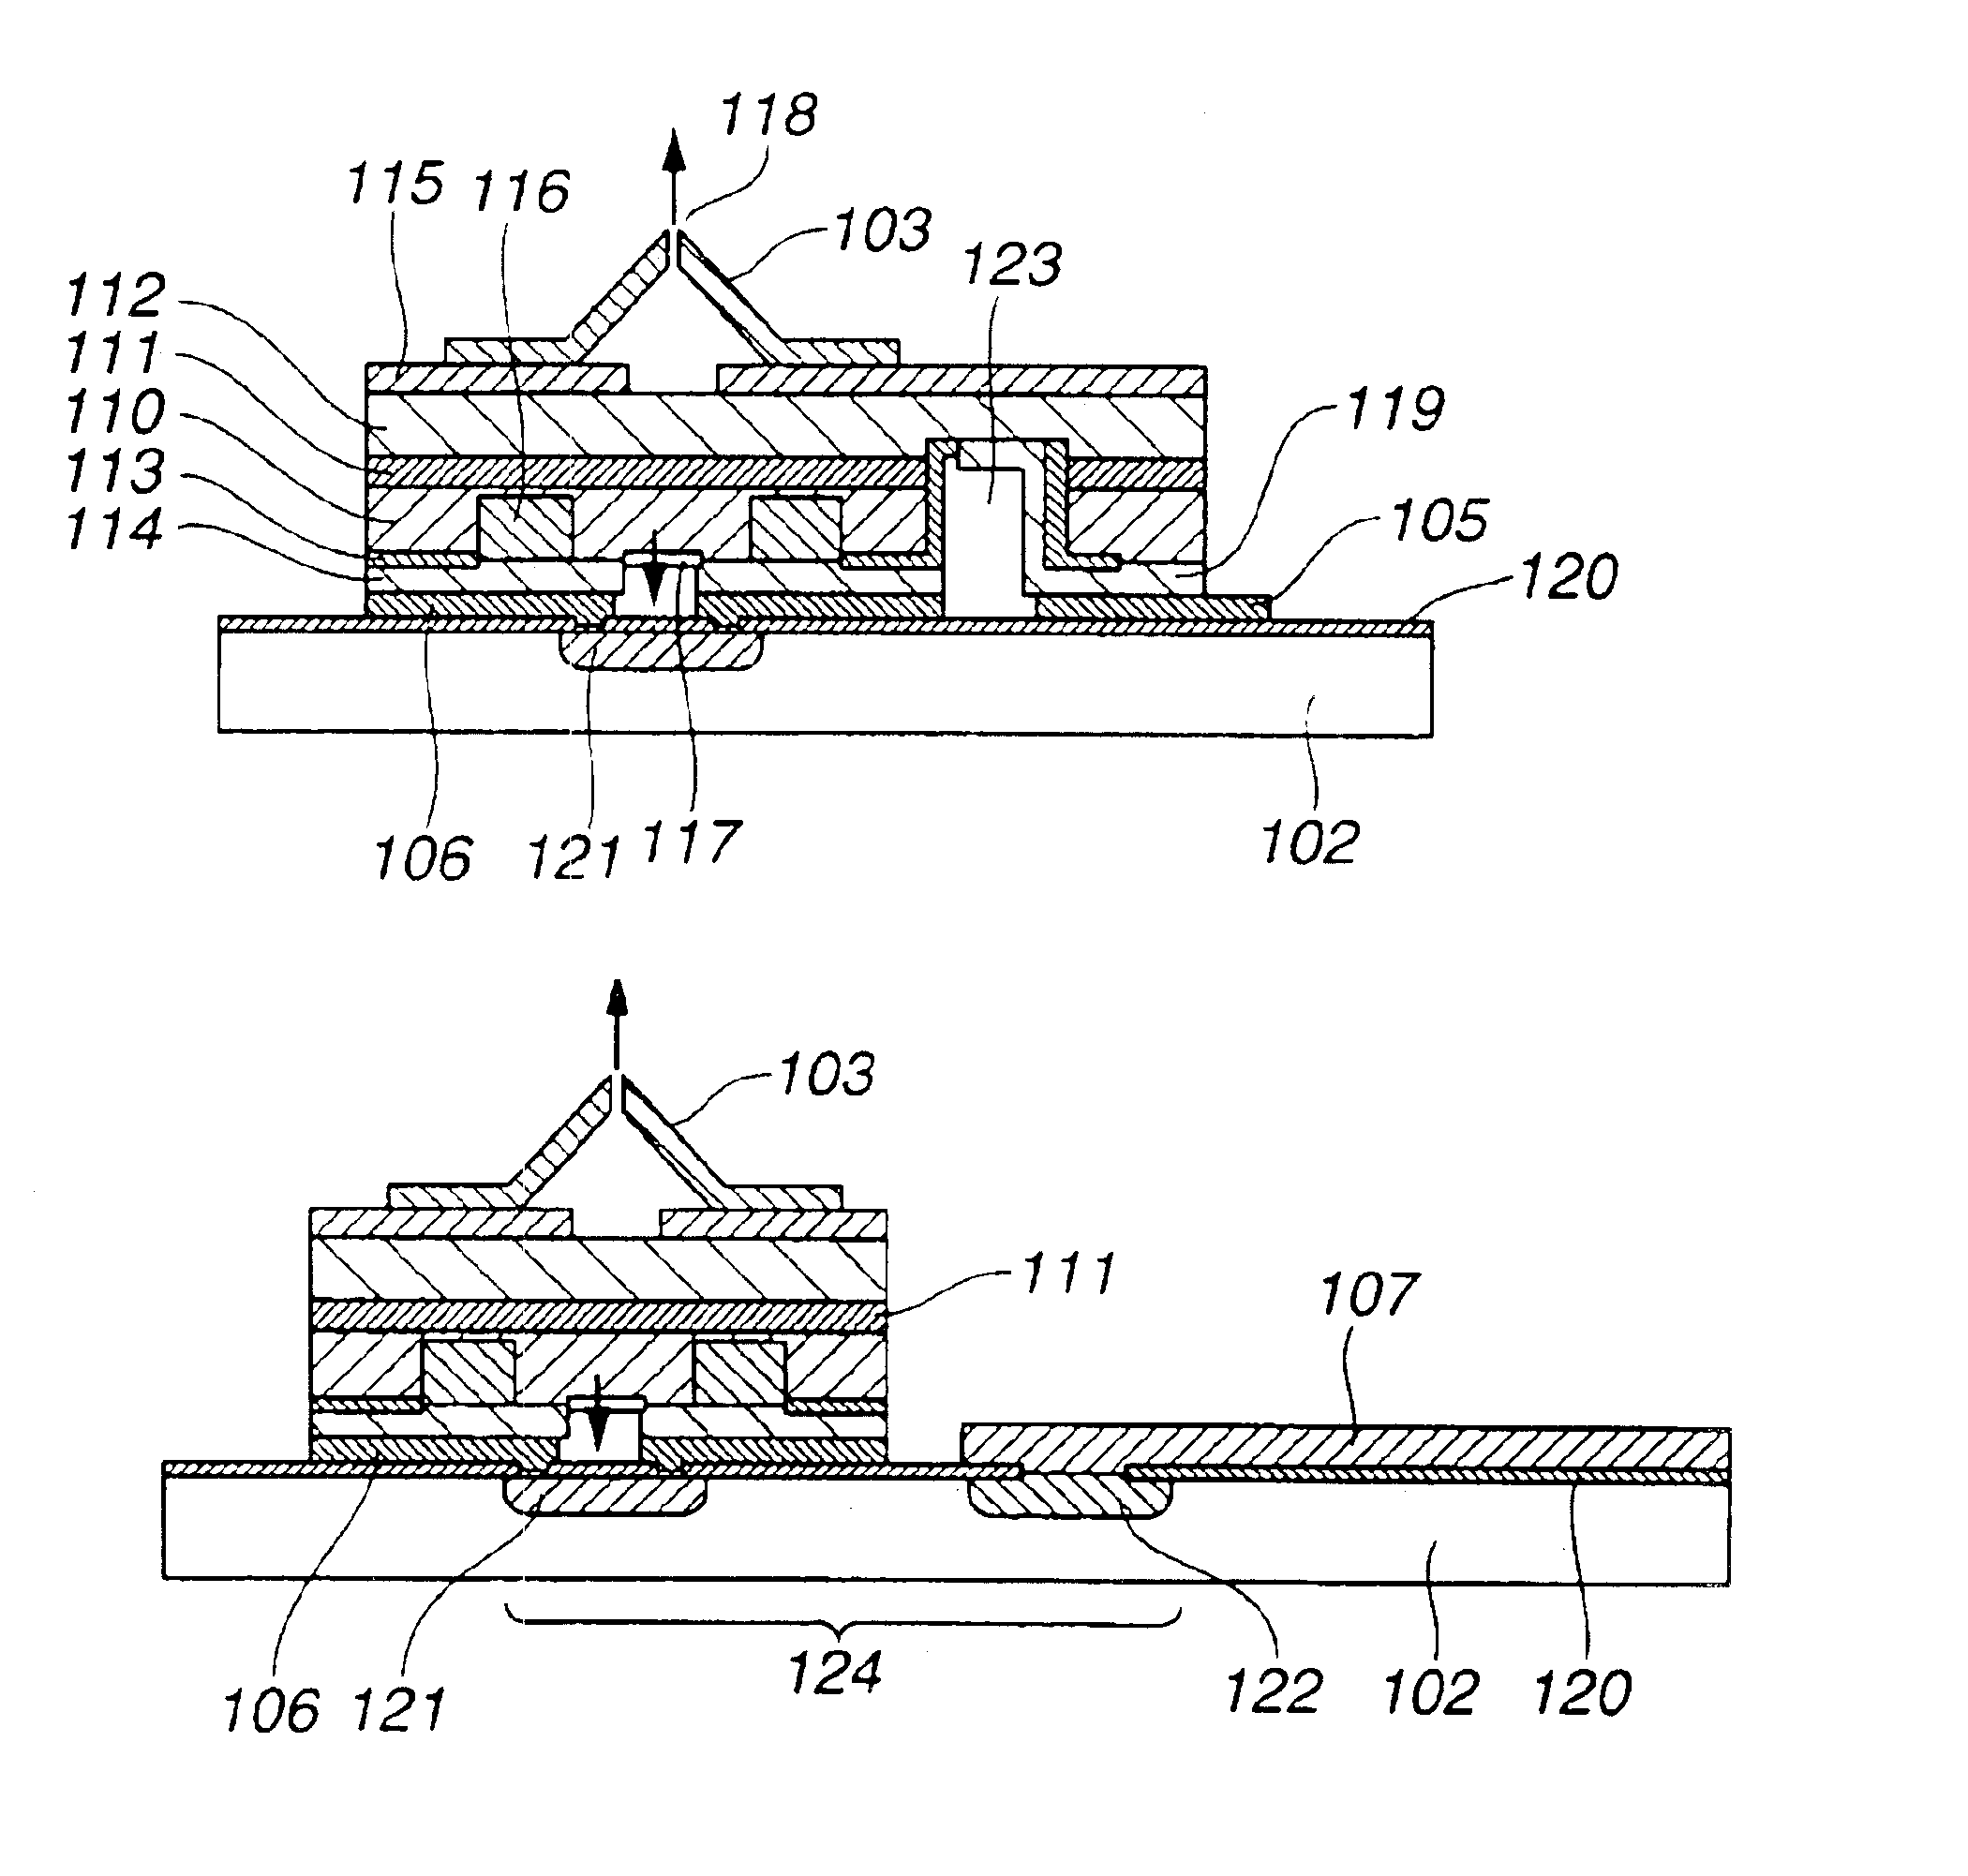 Surface-type optical apparatus